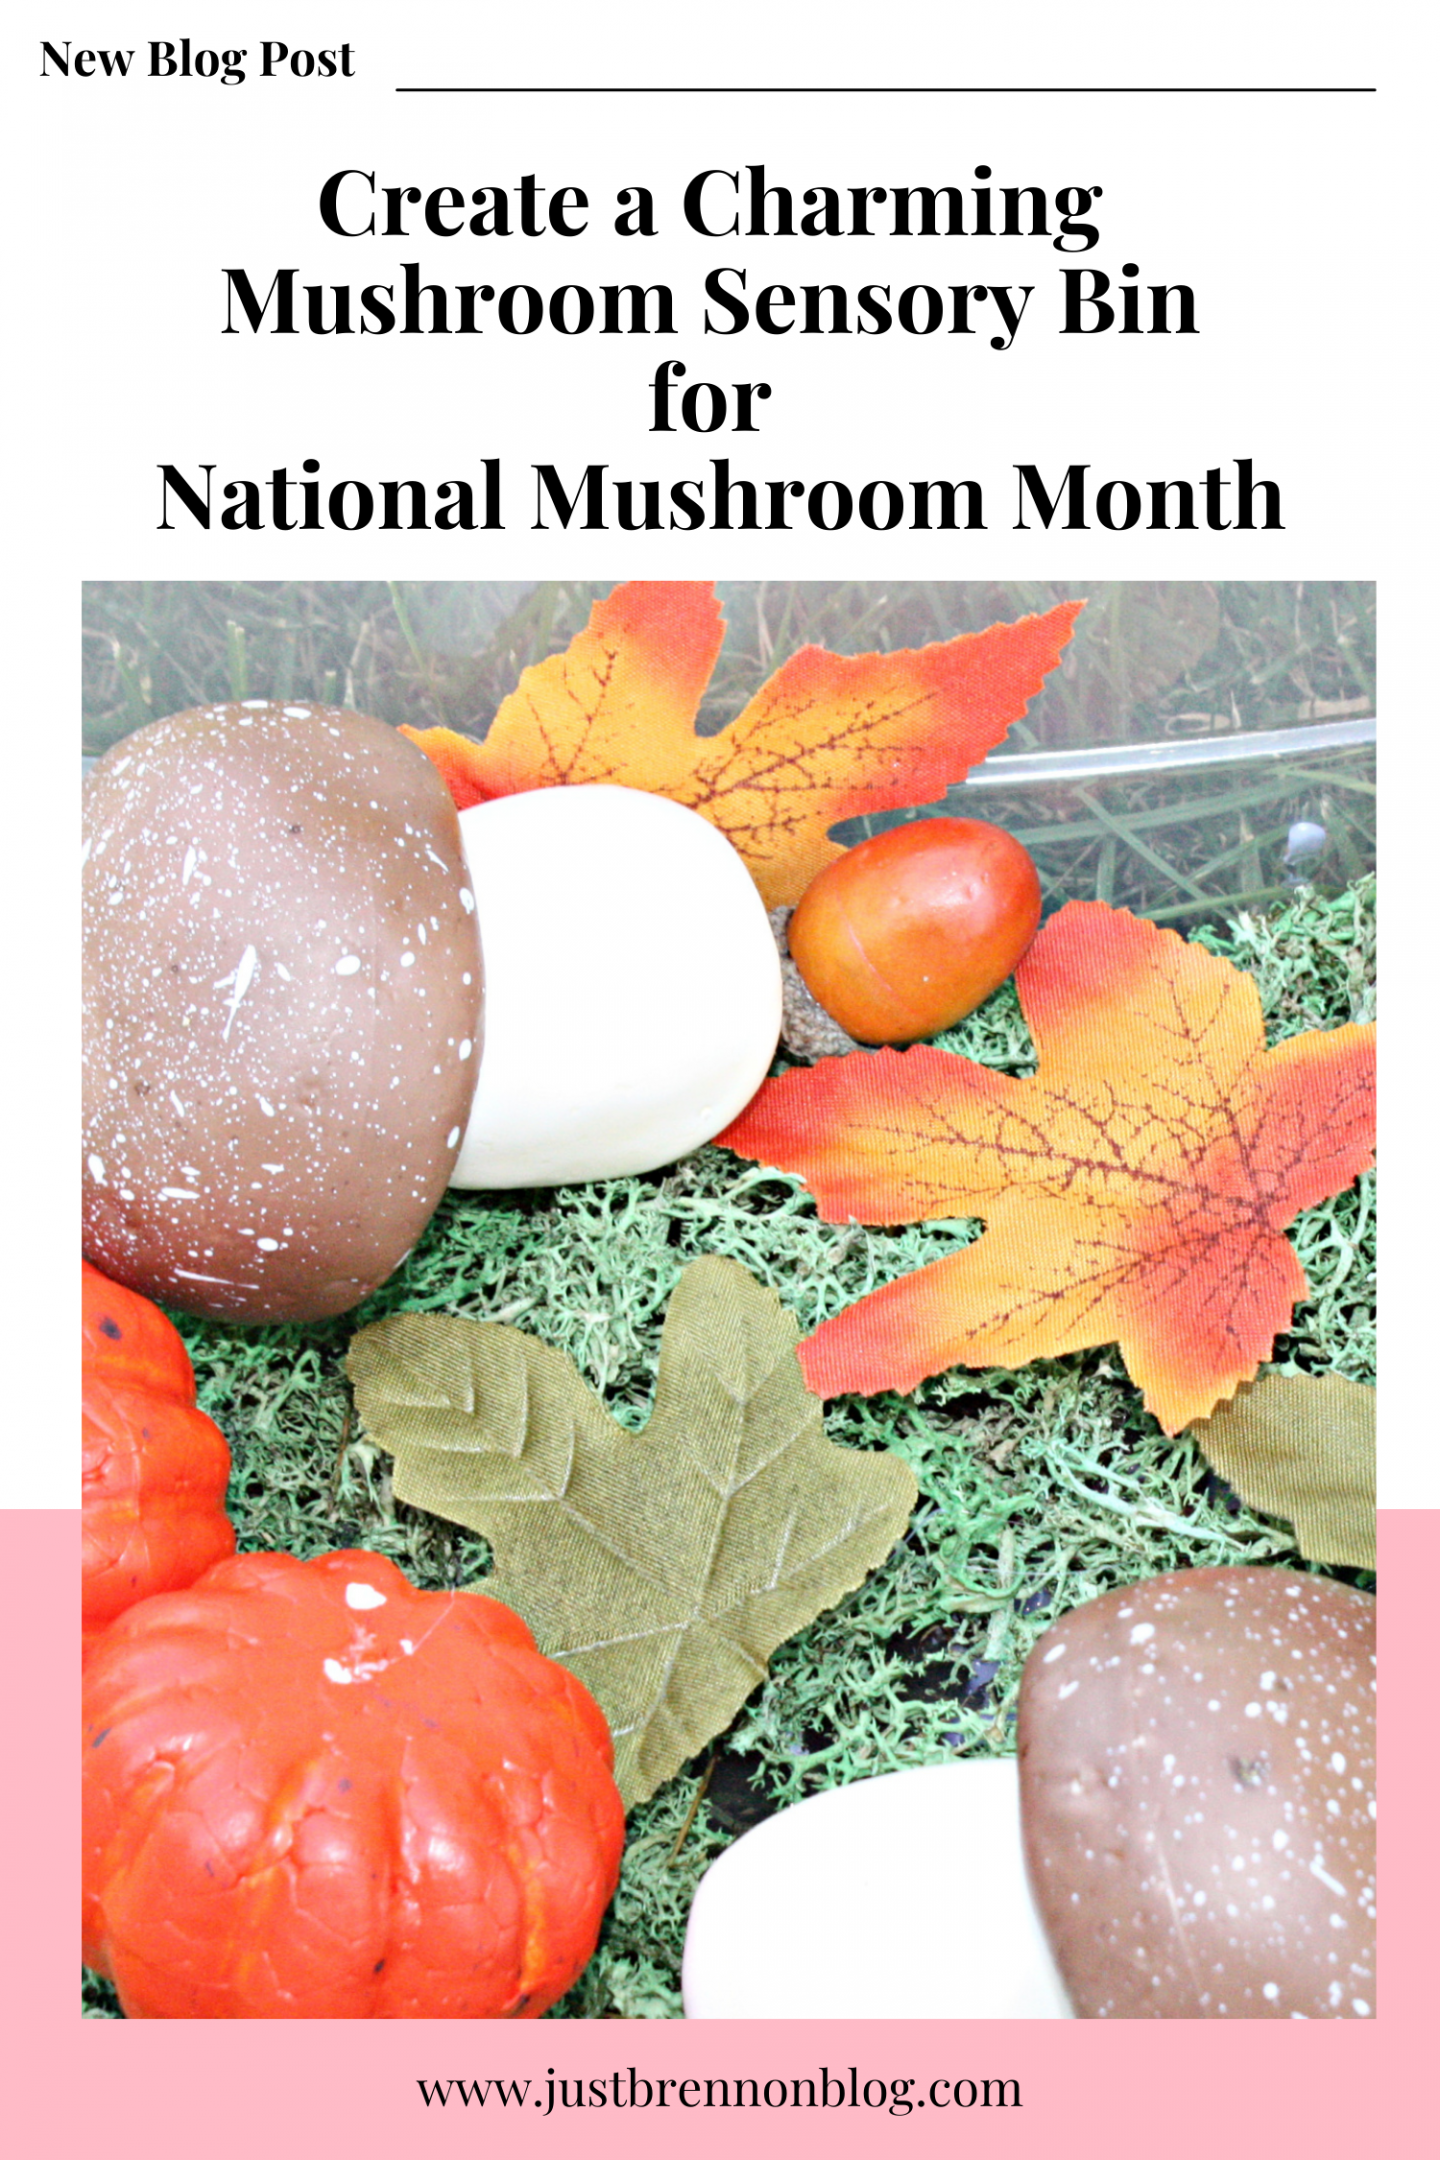 Create a Charming Sensory Bin for National Mushroom Month